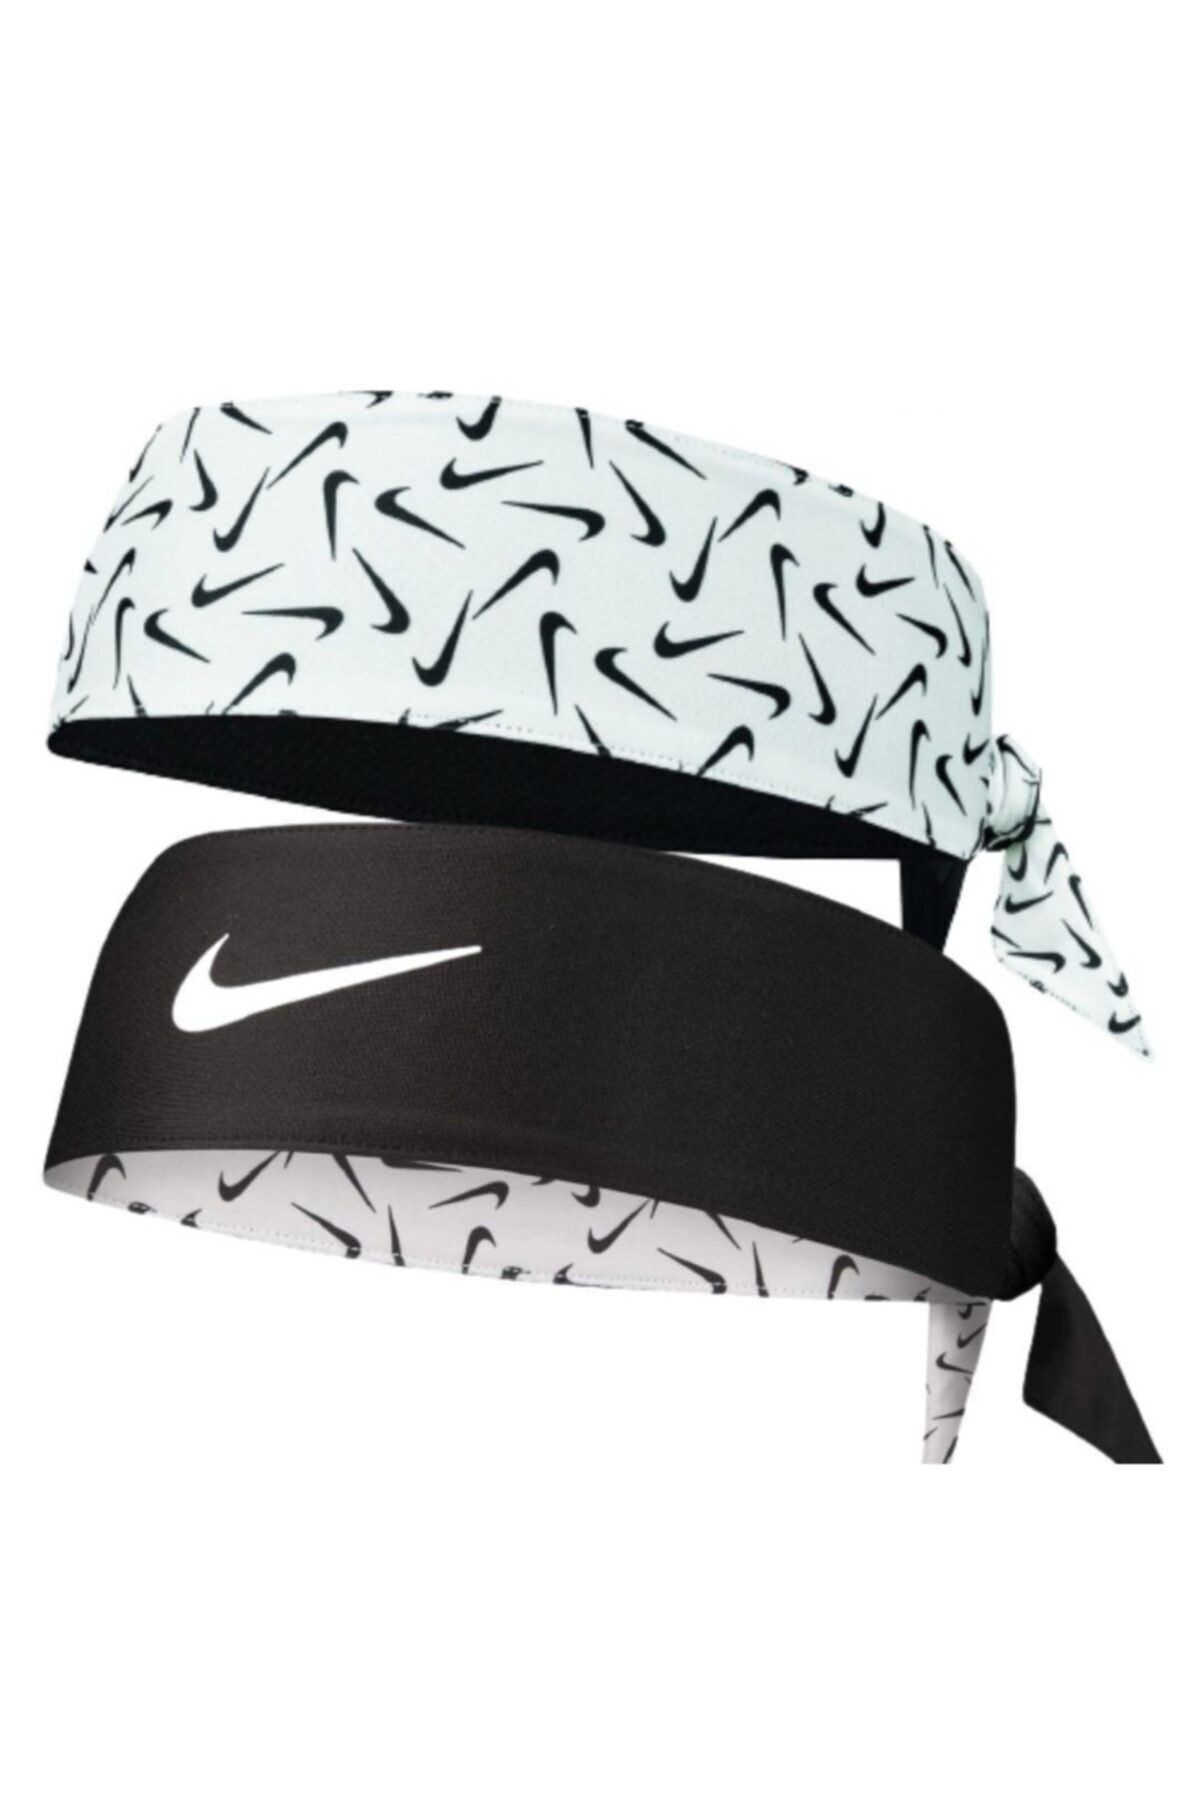 Nike Dri-Fit Printed Bandana (Black/White) Unisex, Camo/Black, One Size :  : Clothing, Shoes & Accessories